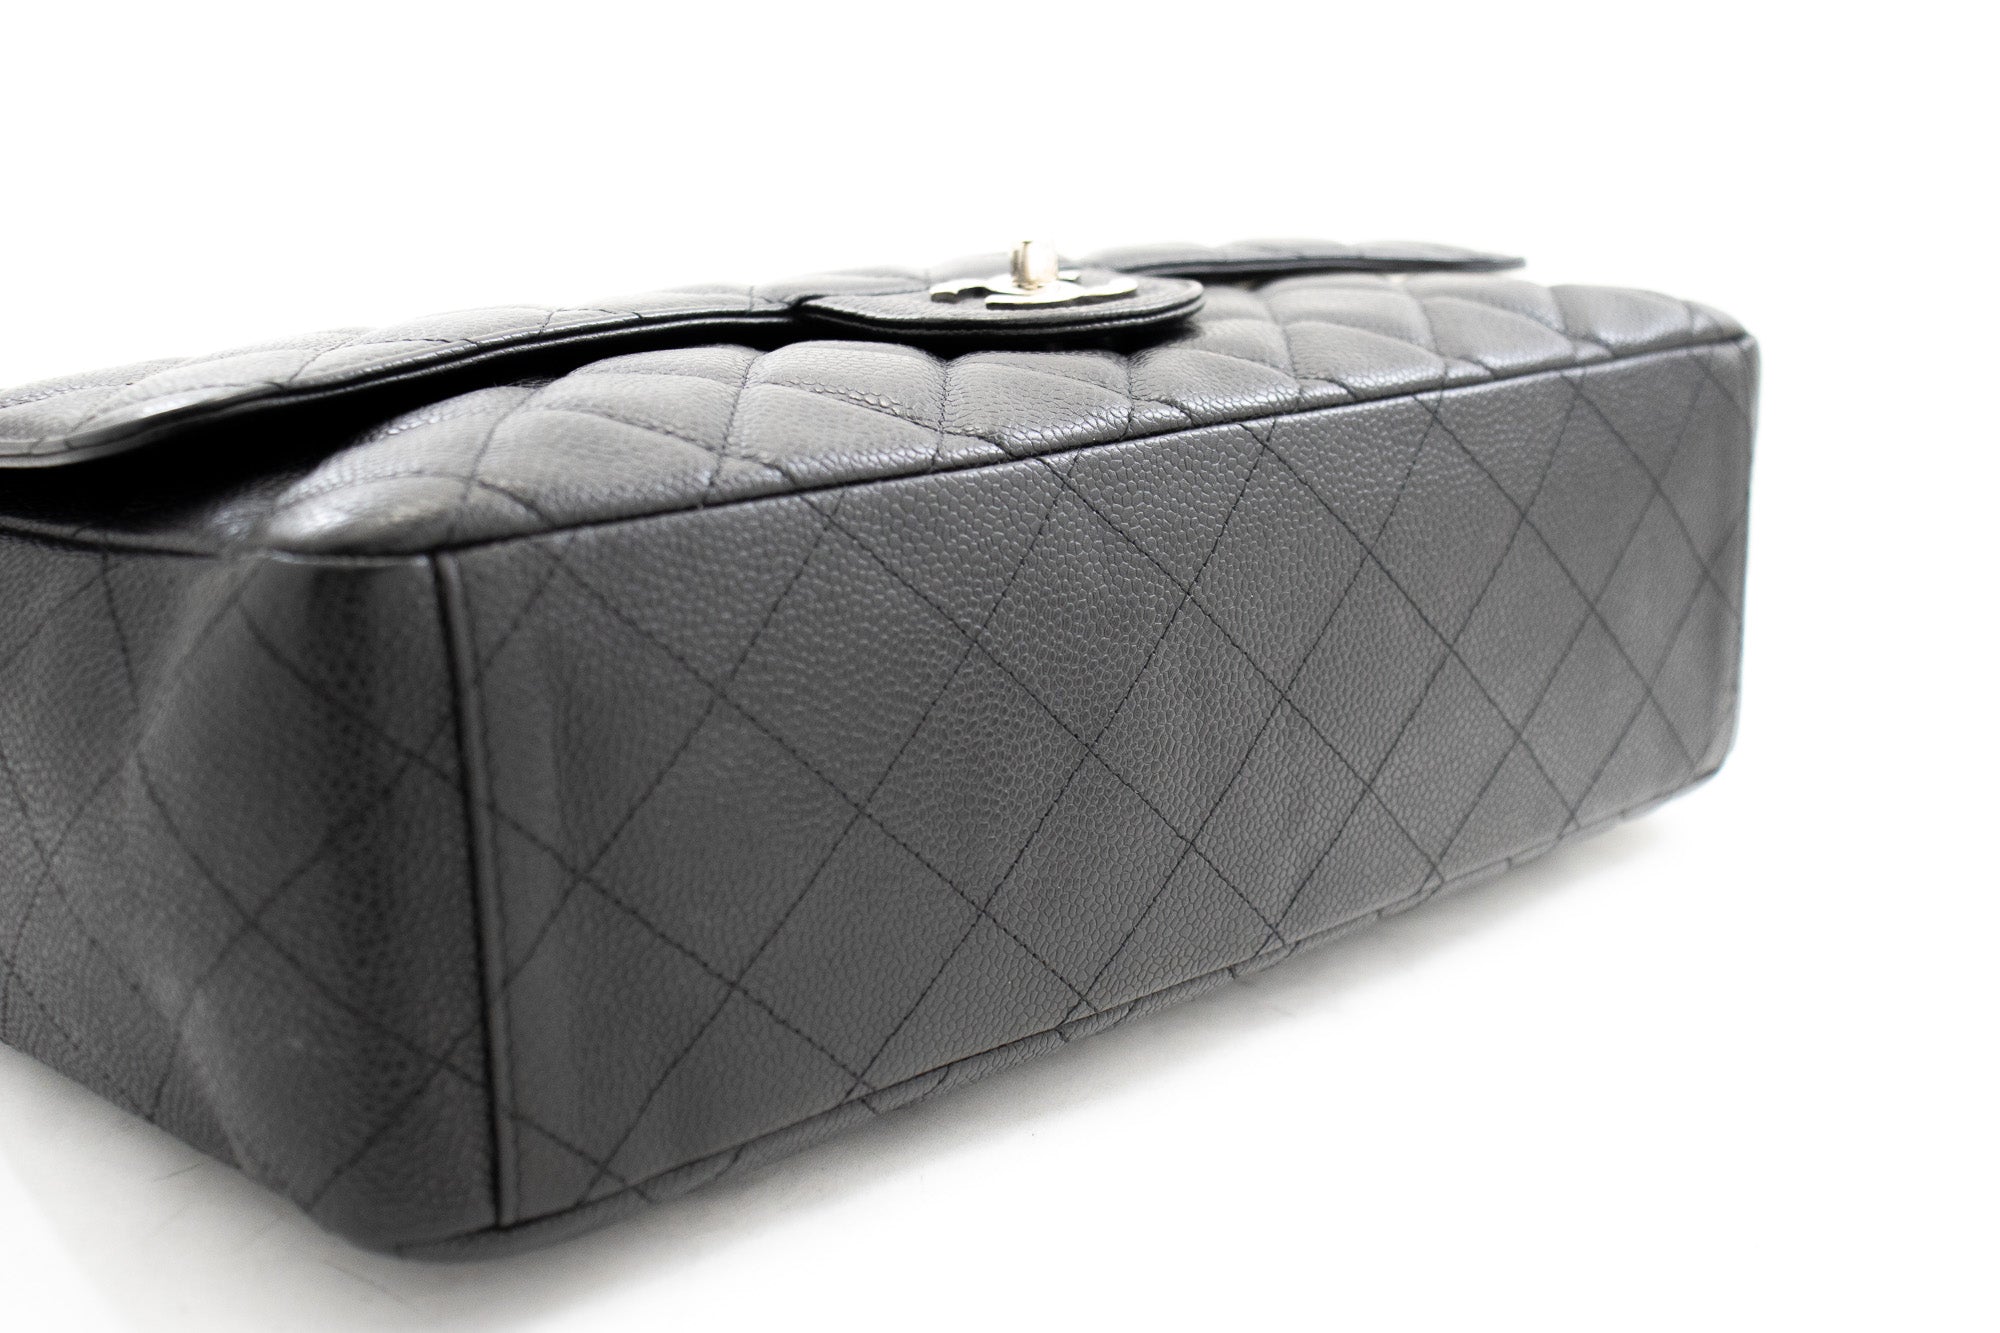 Chanel Caviar Grained Calfskin Flap Chain Shoulder Bag Black 13 i90